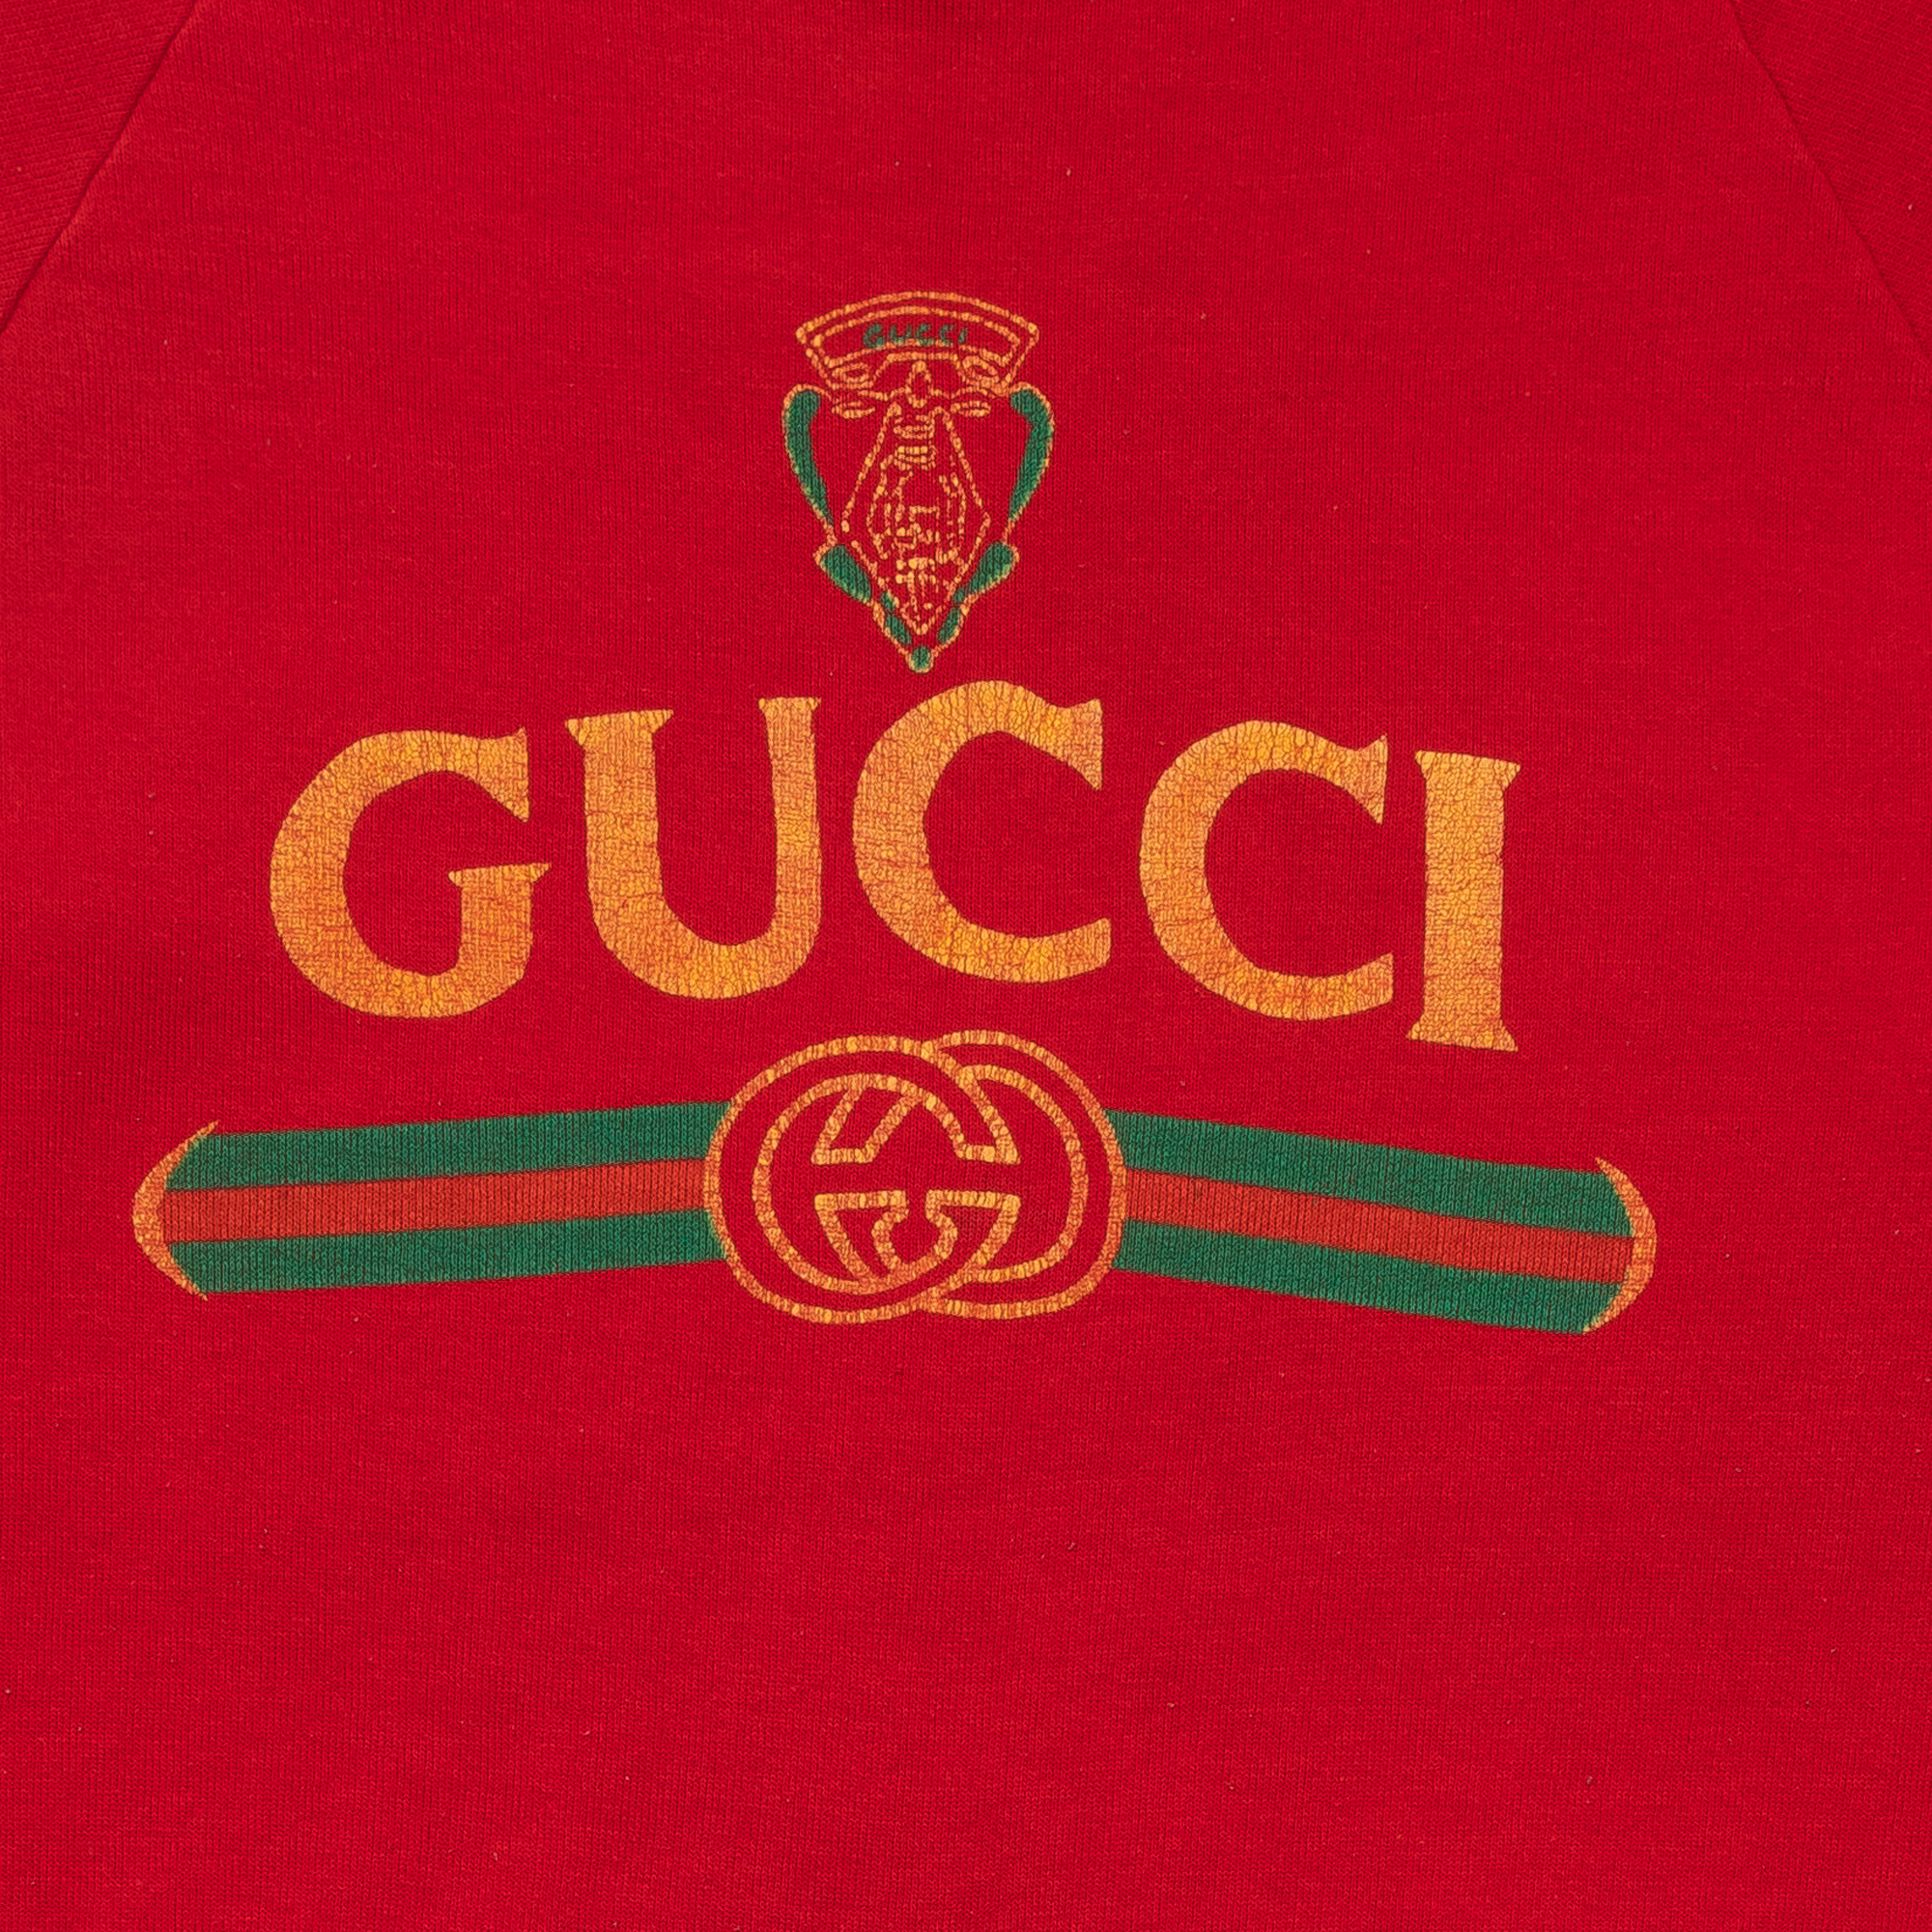 Gucci Bootleg Jerzees 90s Raglan Crewneck Red-PLUS